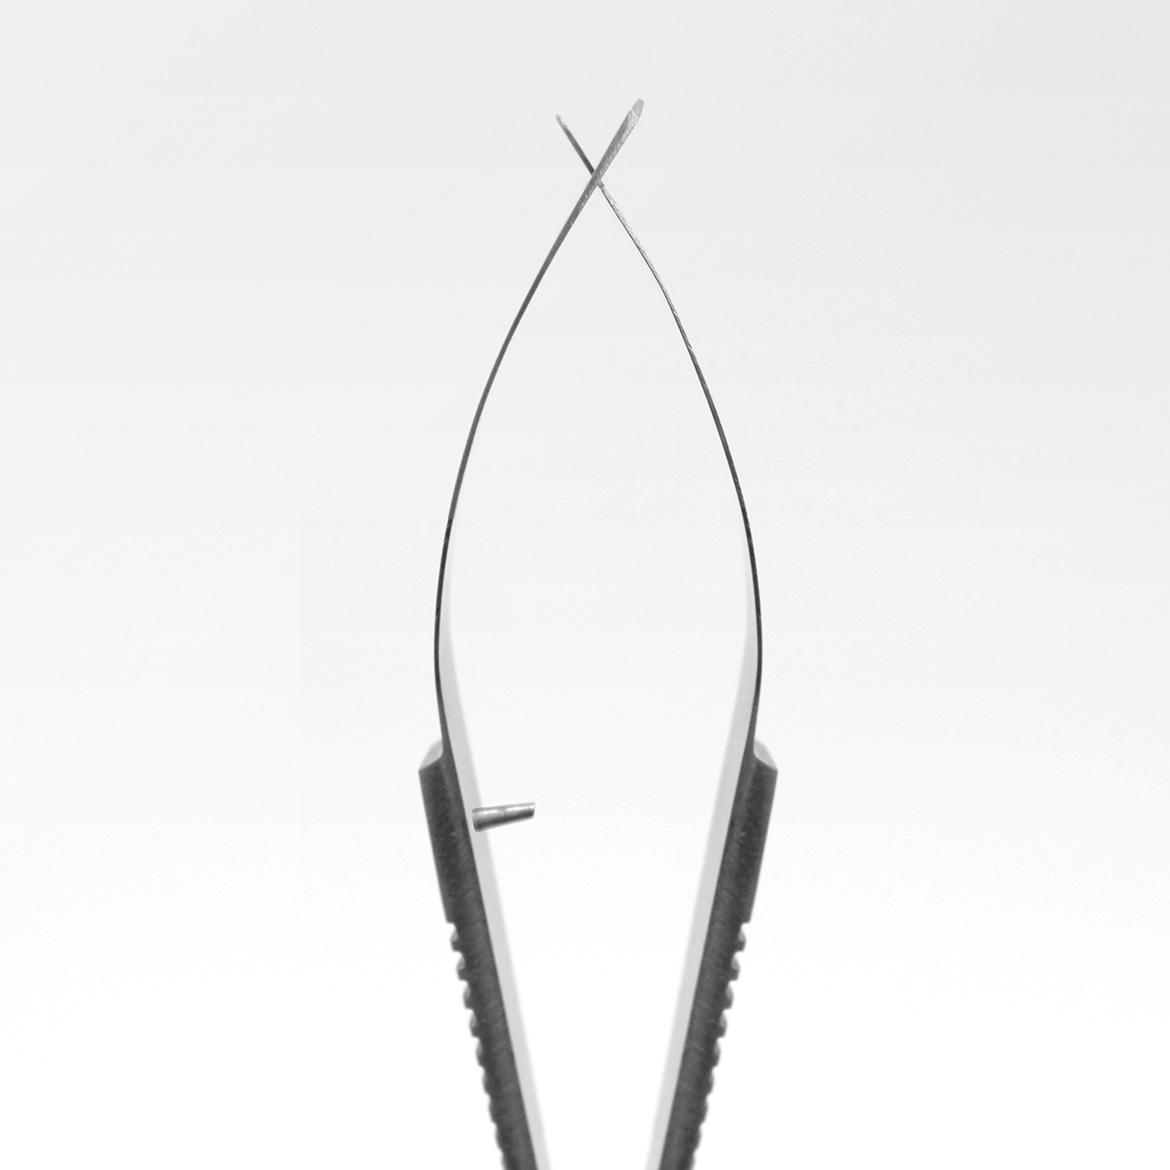 Aqua Rebell Spring Scissors curved 16 cm